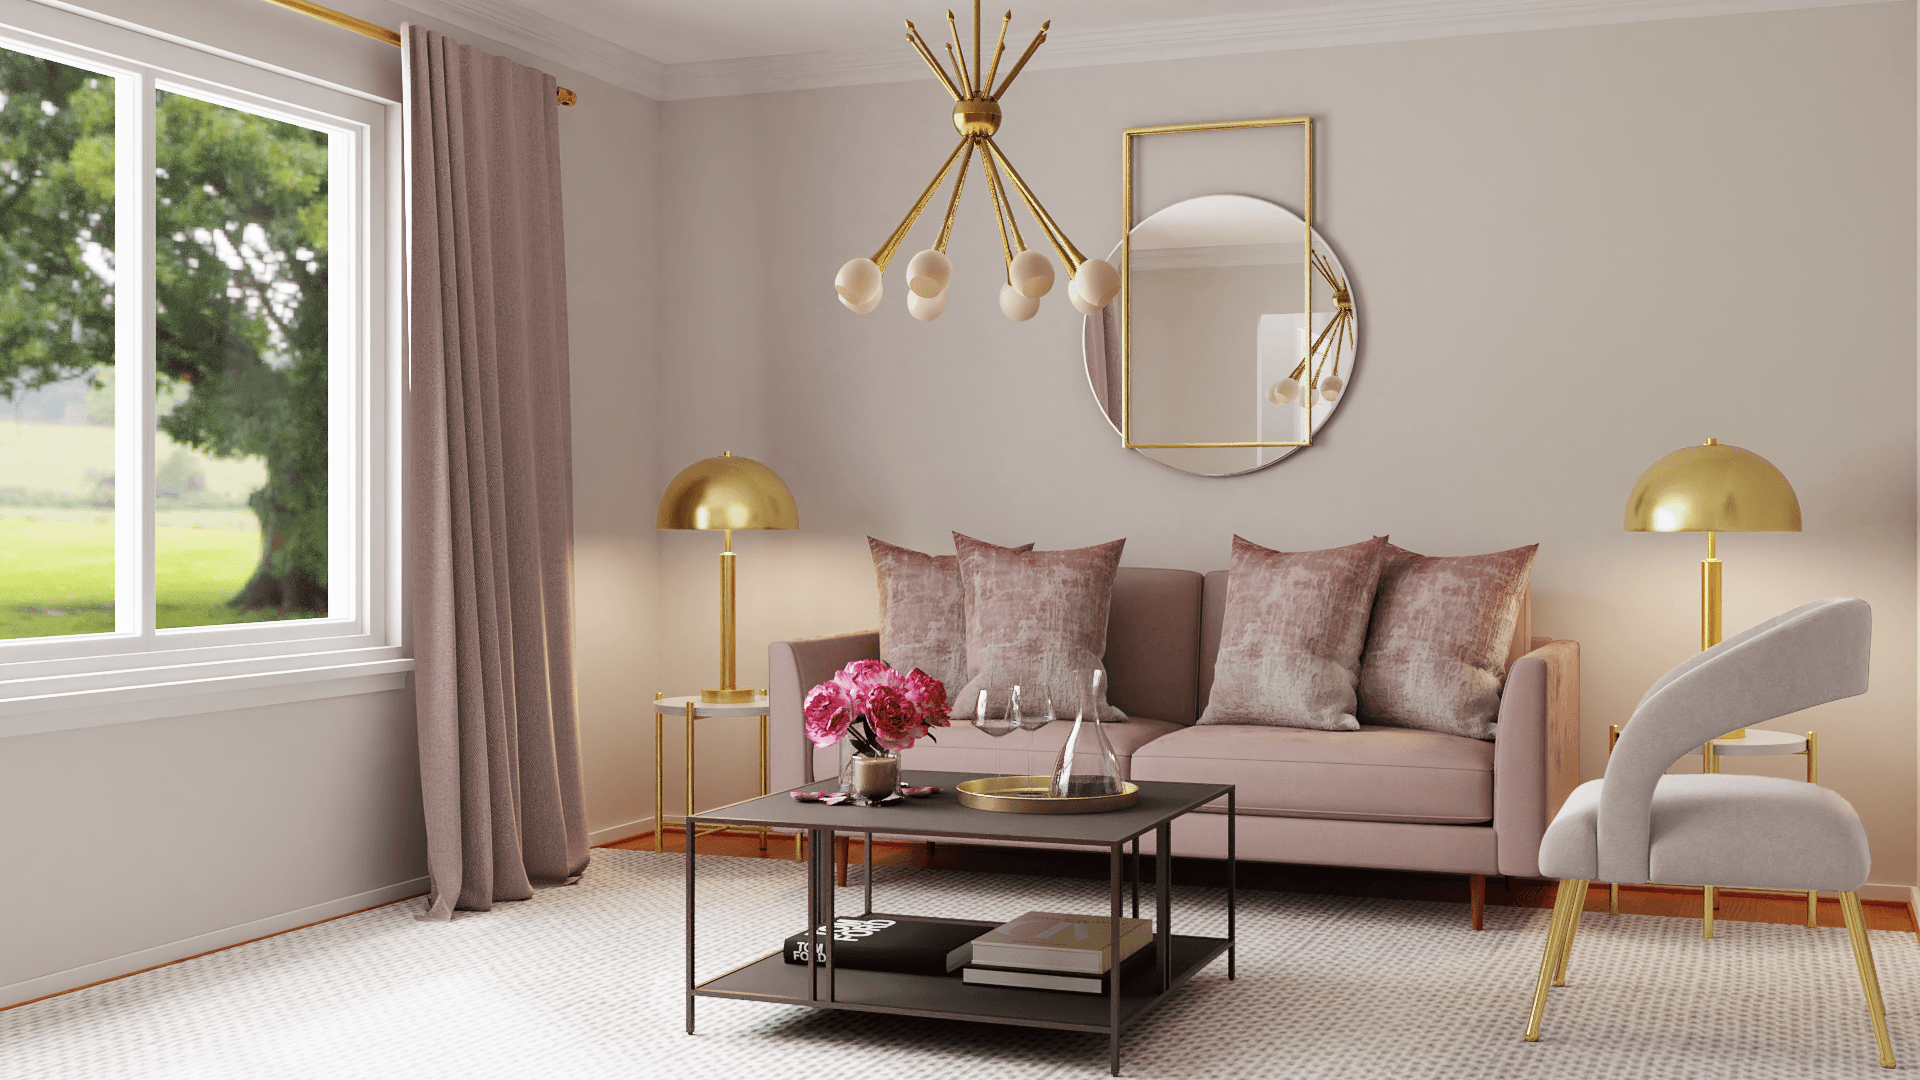 Blush Tones Add Glam To This Minimal Living Room